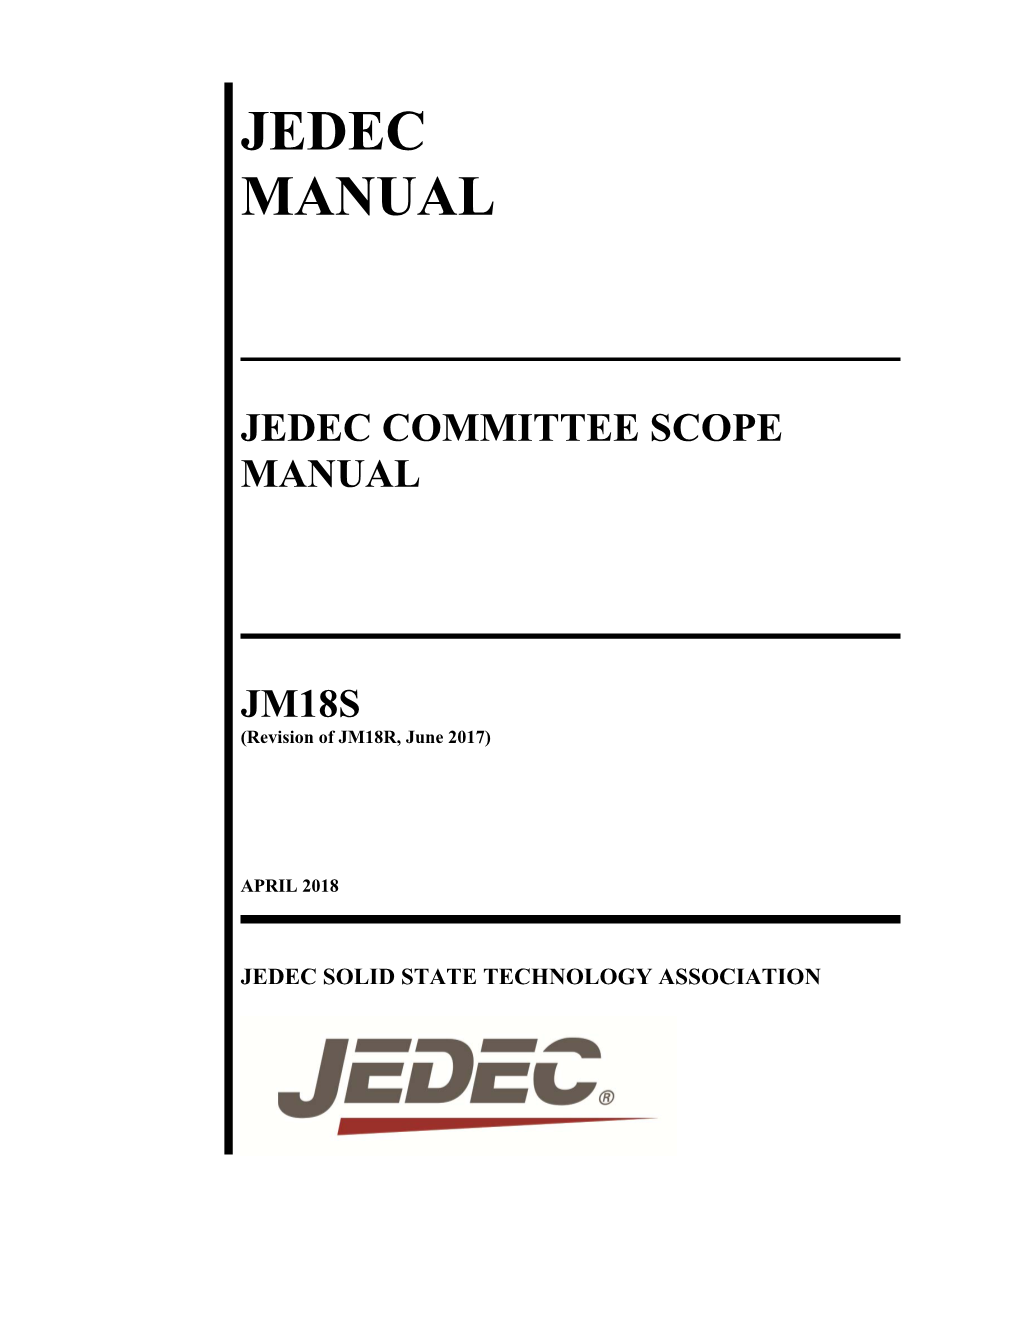 JM18: JEDEC Committee Scope Manual